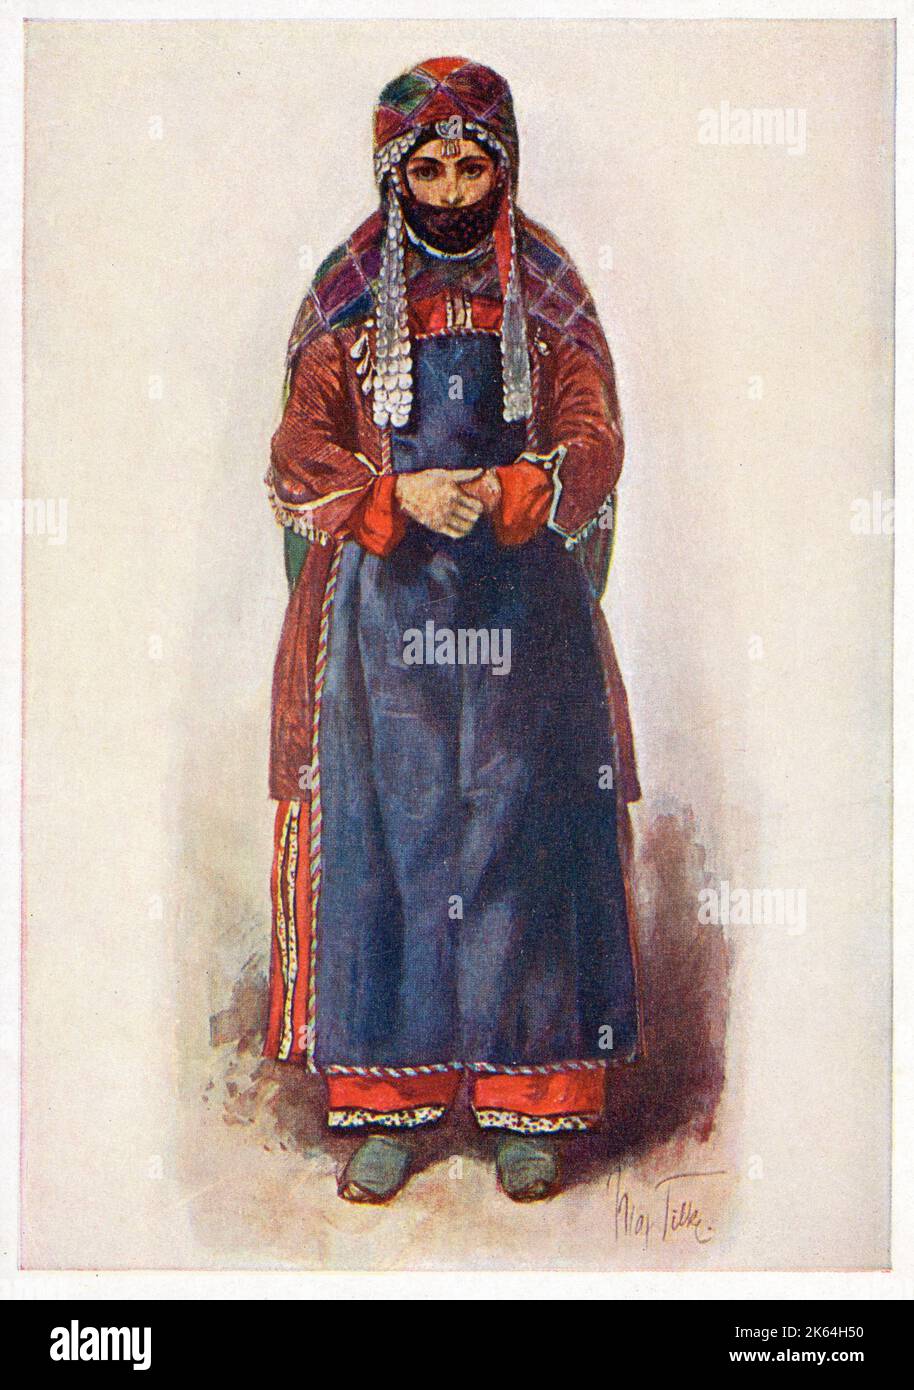 People of the Caucasus series by Max Karl Tilke - Turko-Tatar Woman from Sheki (Shaki - formerly Nukha), Azerbaijan. Stock Photo